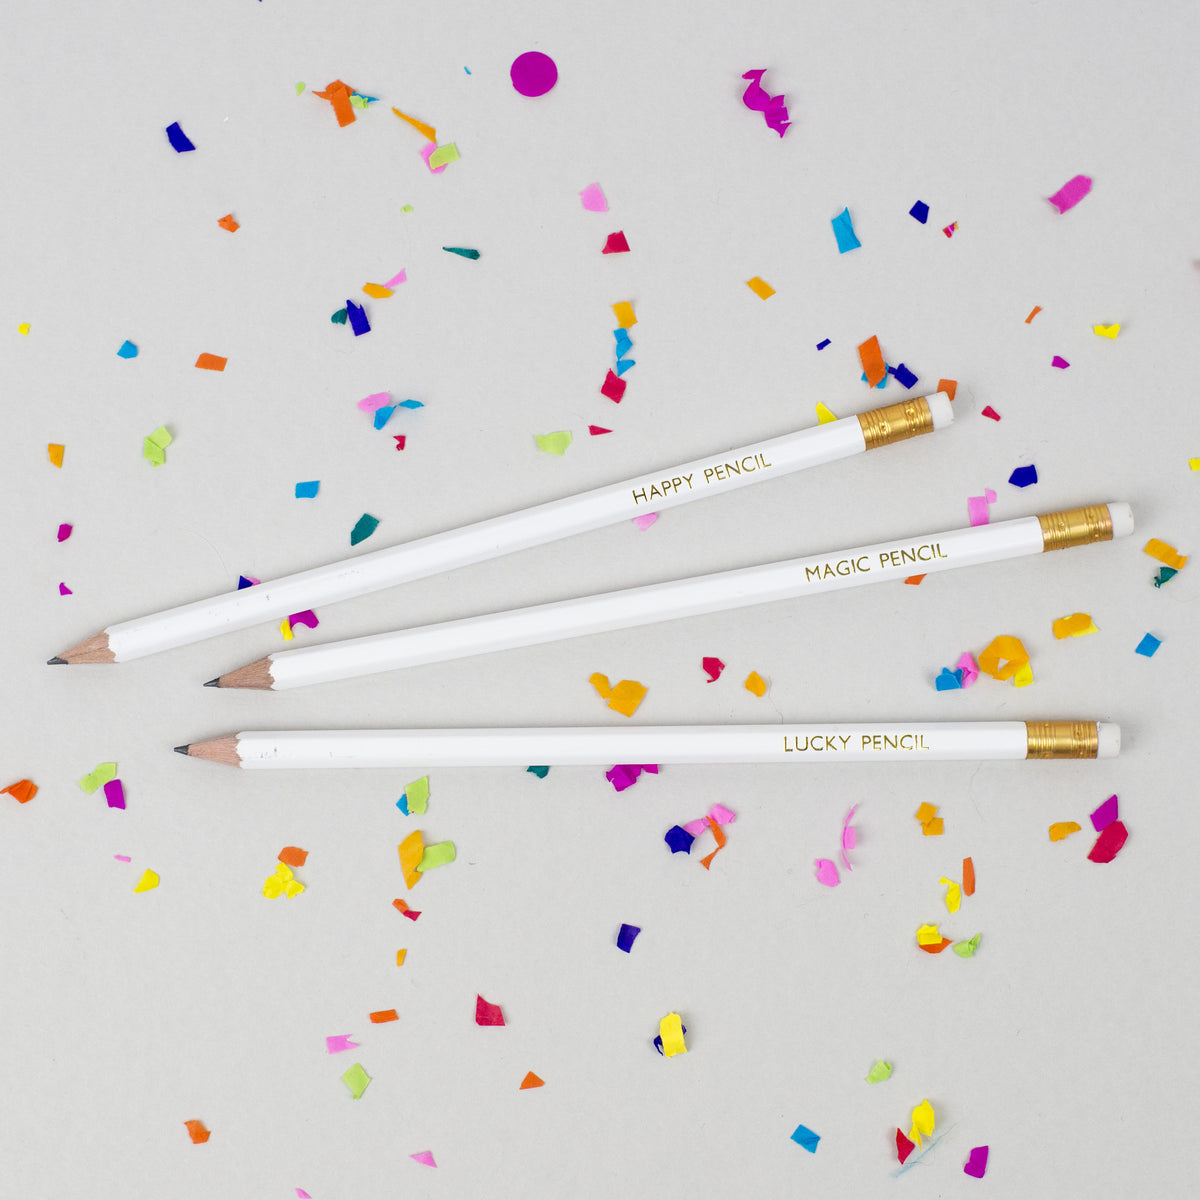 Lucky Pencil / Magic Pencil / Happy Pencil - Pack Of 3 Jolly Good Pencils